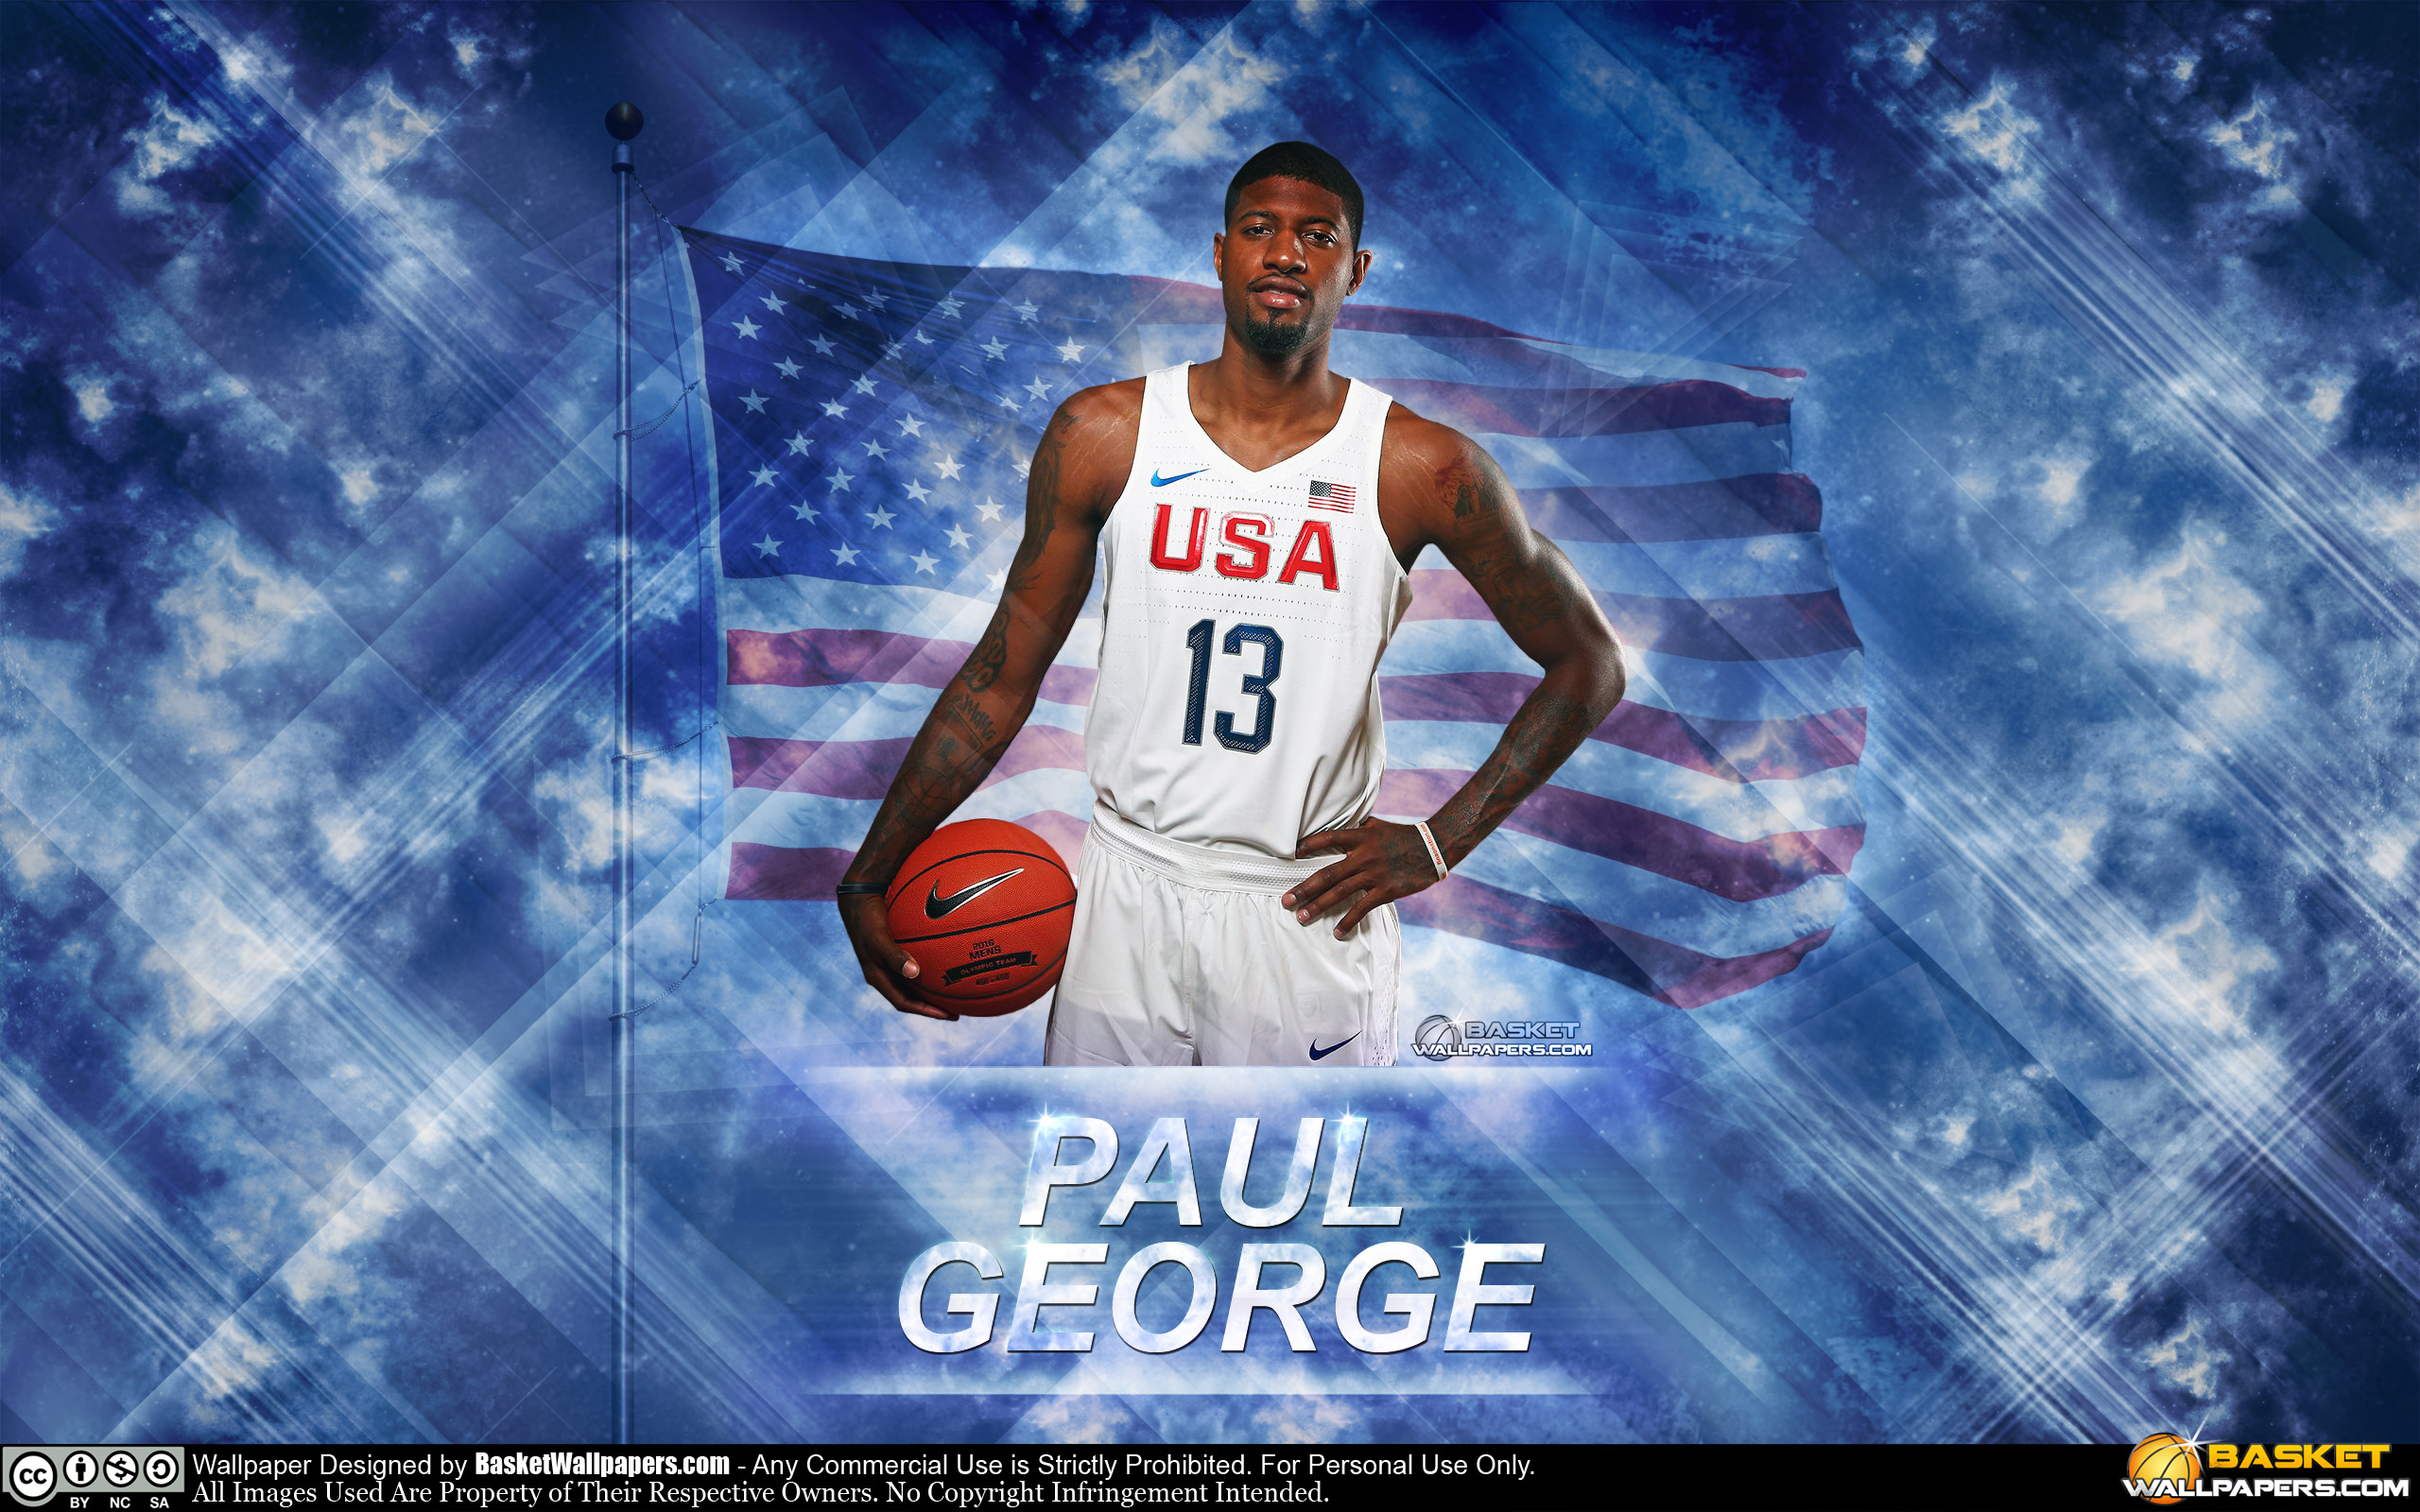 Paul George USA 2016 Olympics Wallpaper  Basketball Wallpapers at